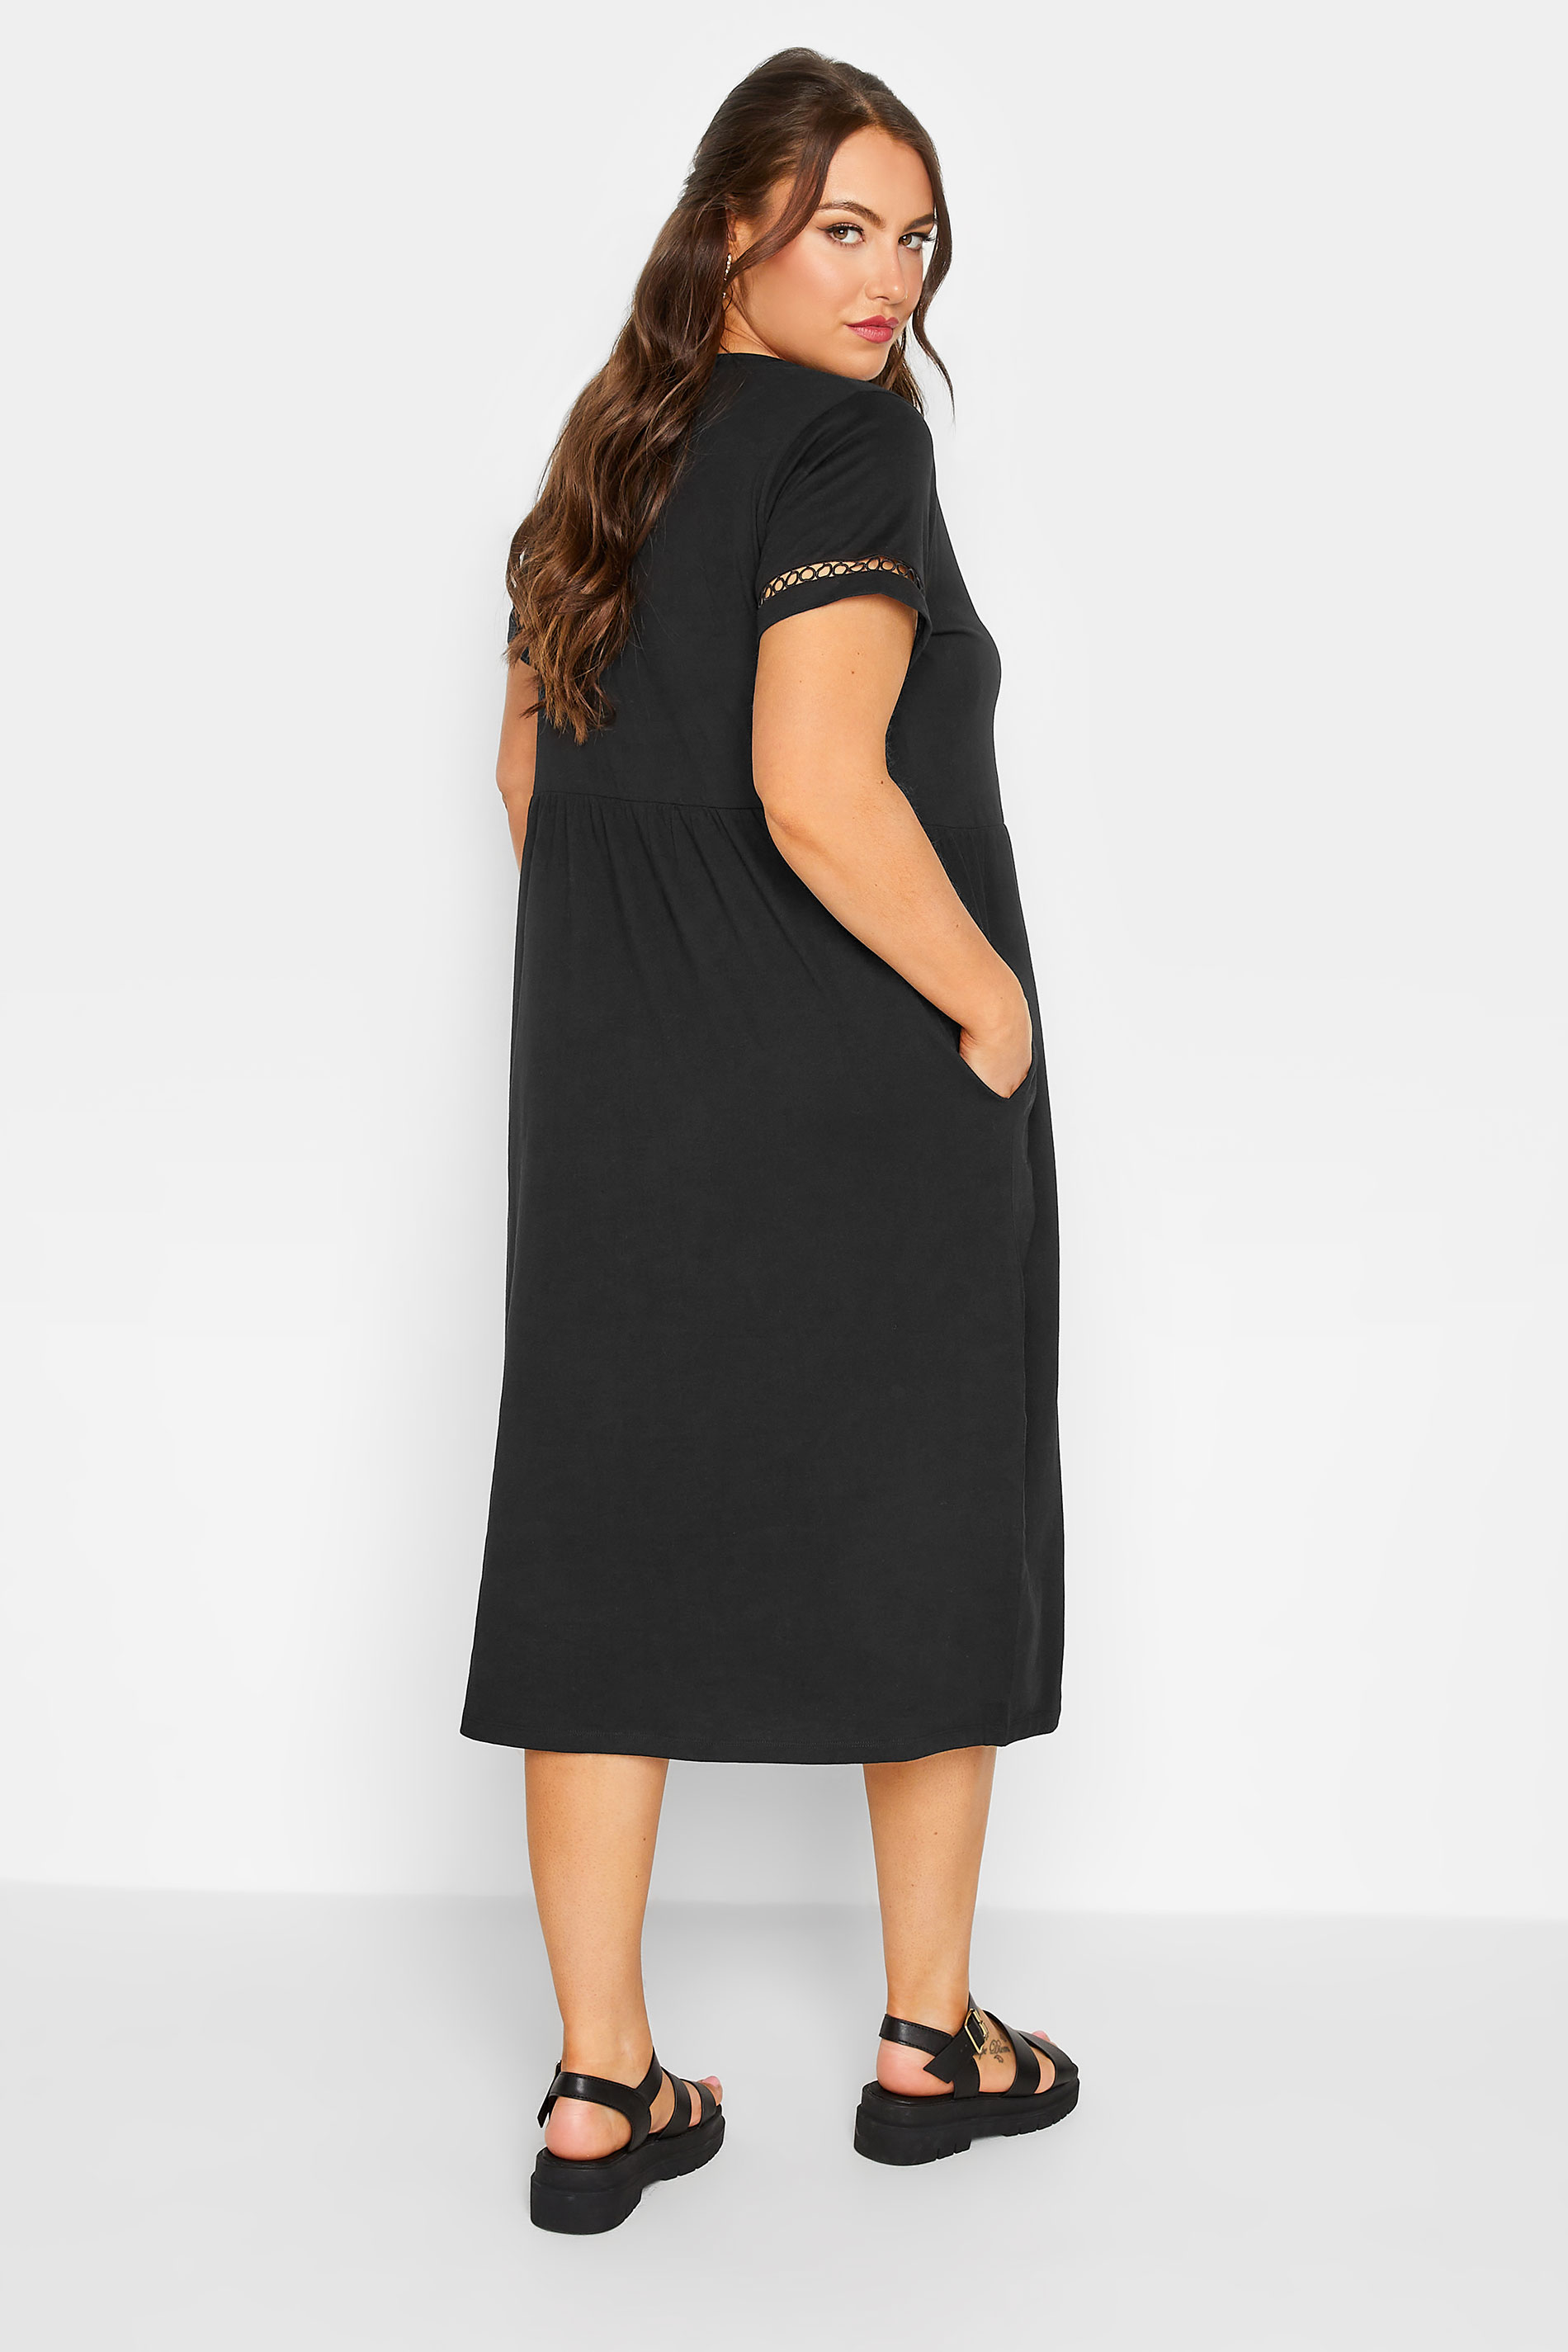 LIMITED COLLECTION Plus Size Black Crochet Trim T-Shirt Dress | Yours Clothing 3